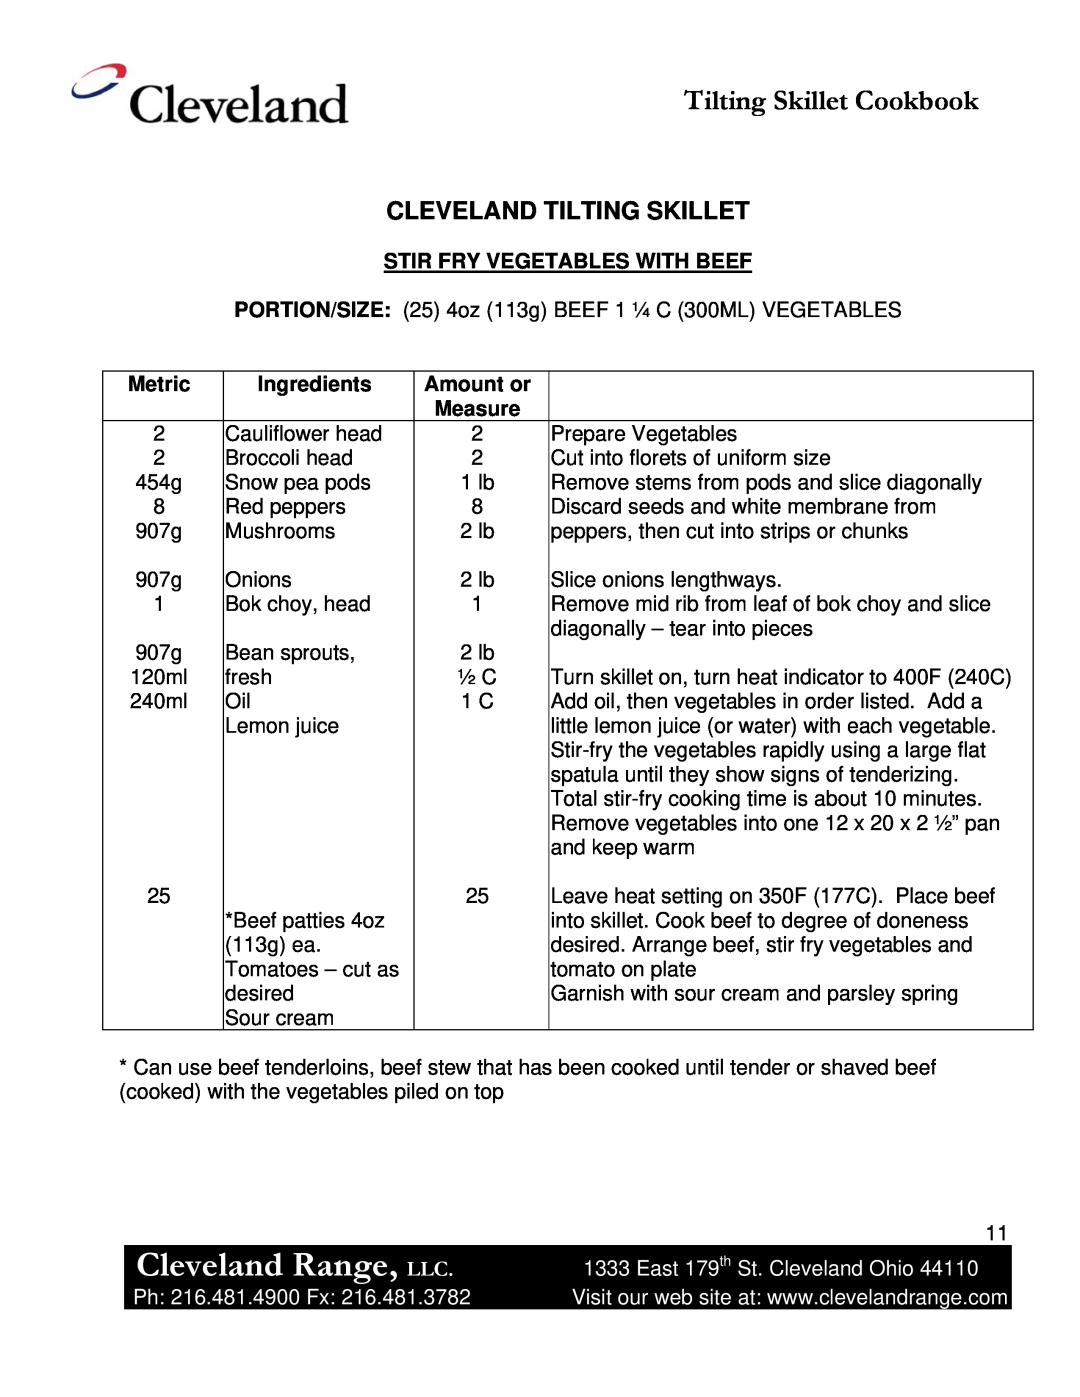 Cleveland Range Skillet/Braising manual Cleveland Range, LLC, Tilting Skillet Cookbook, Cleveland Tilting Skillet, Metric 